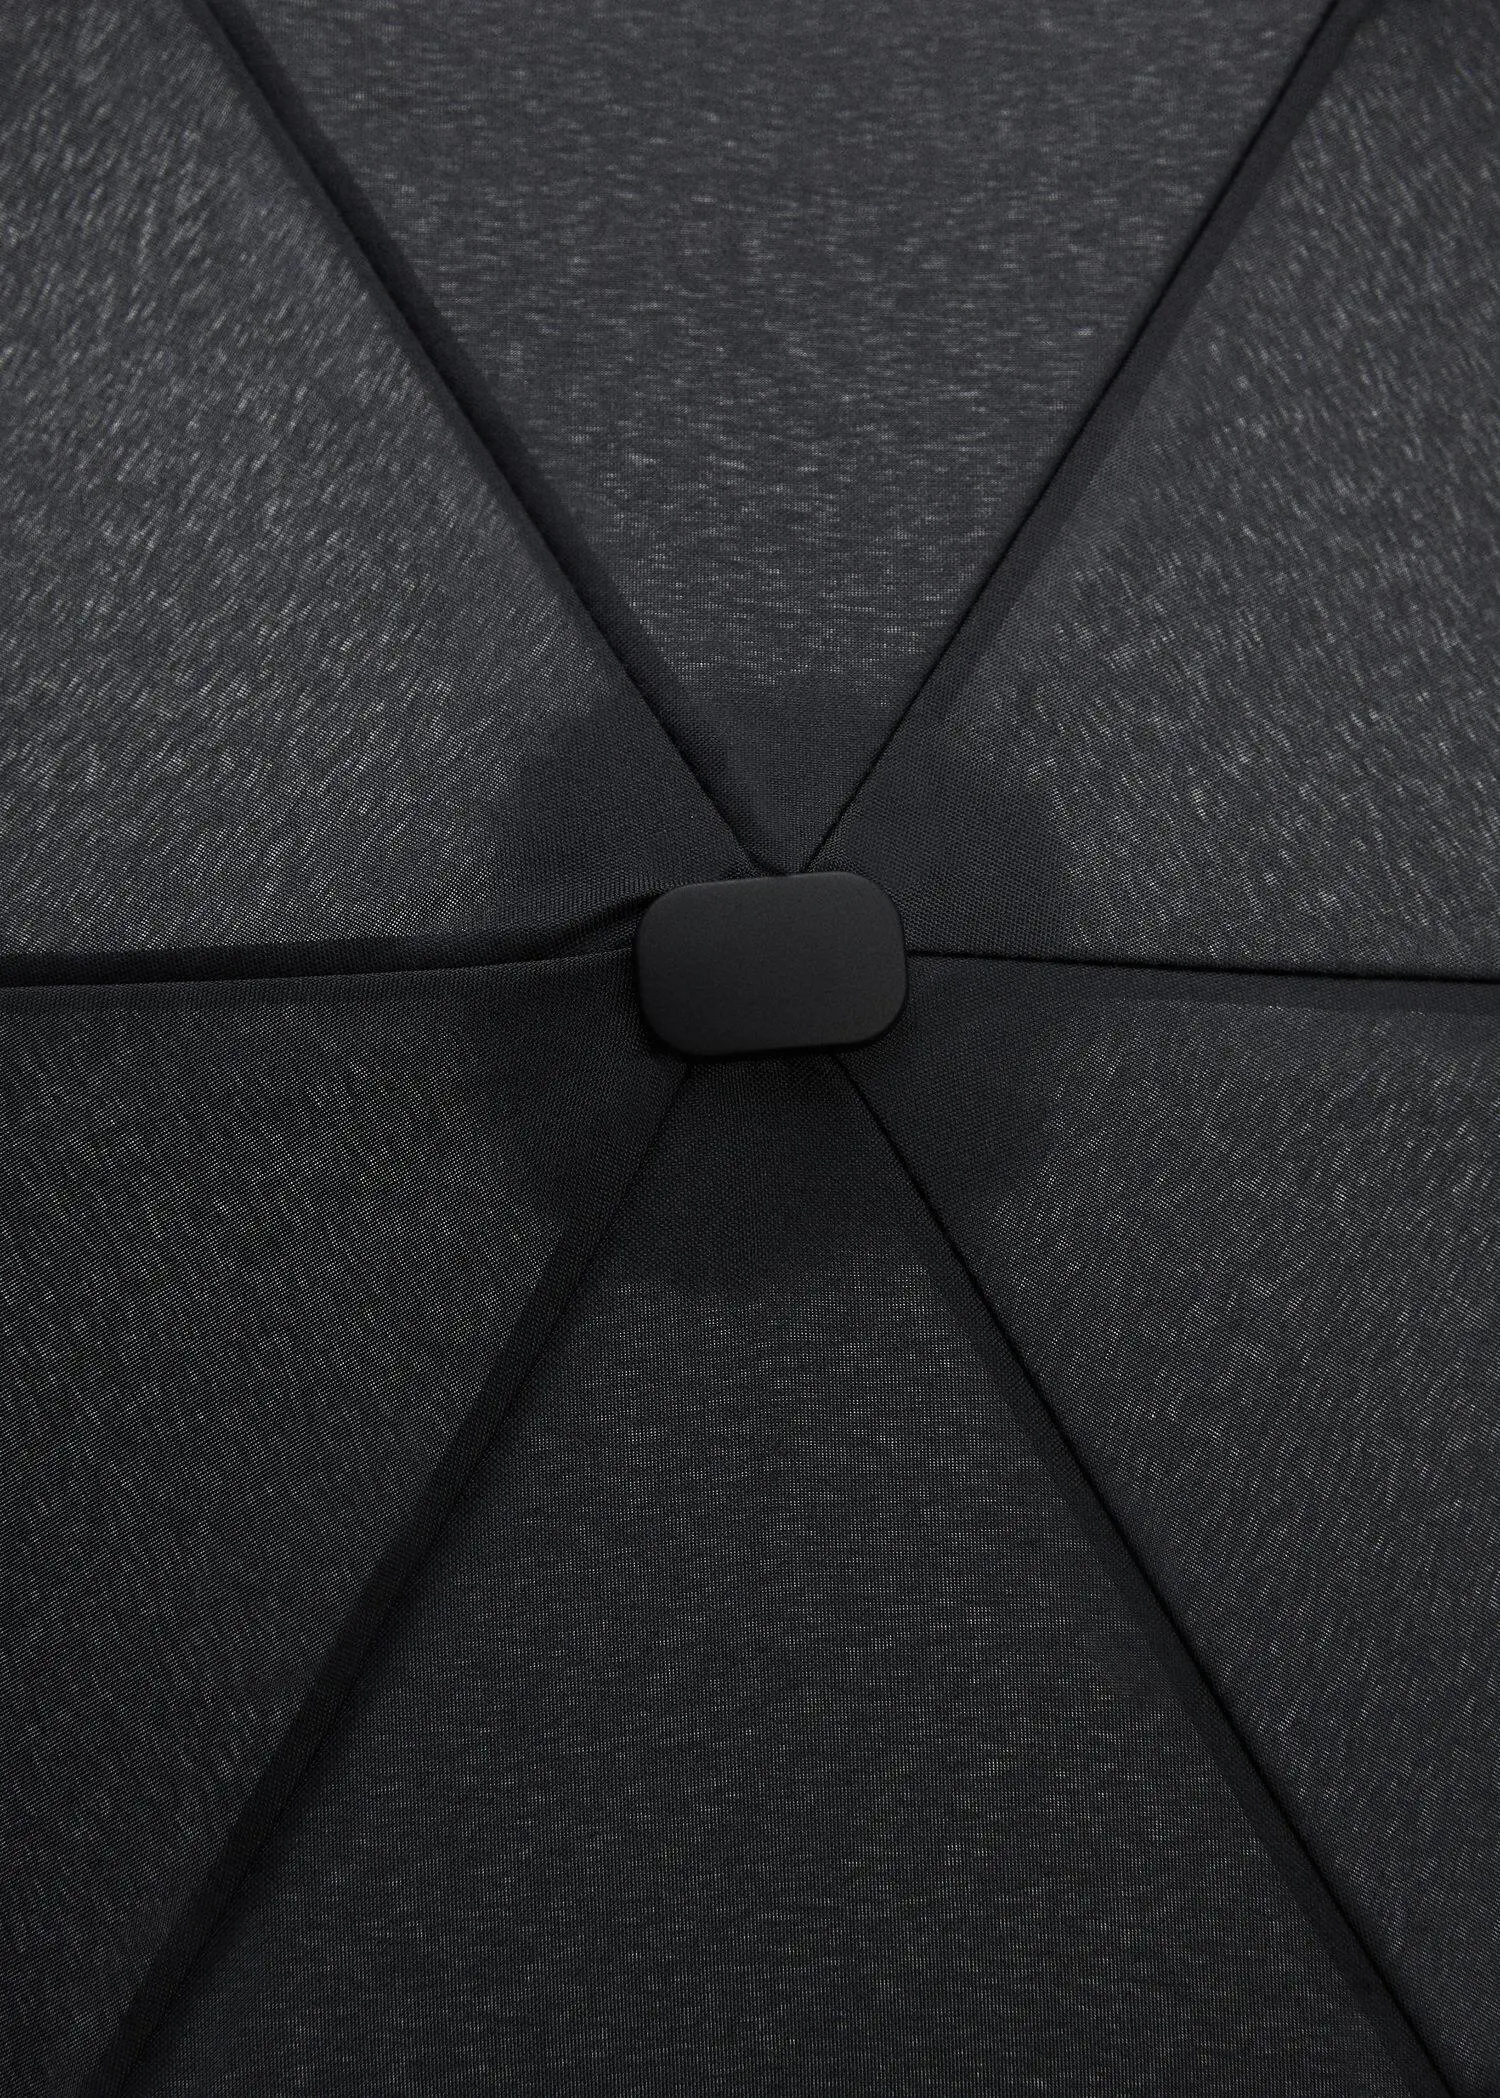 Mango Plain folding umbrella. an open black umbrella with a black handle. 